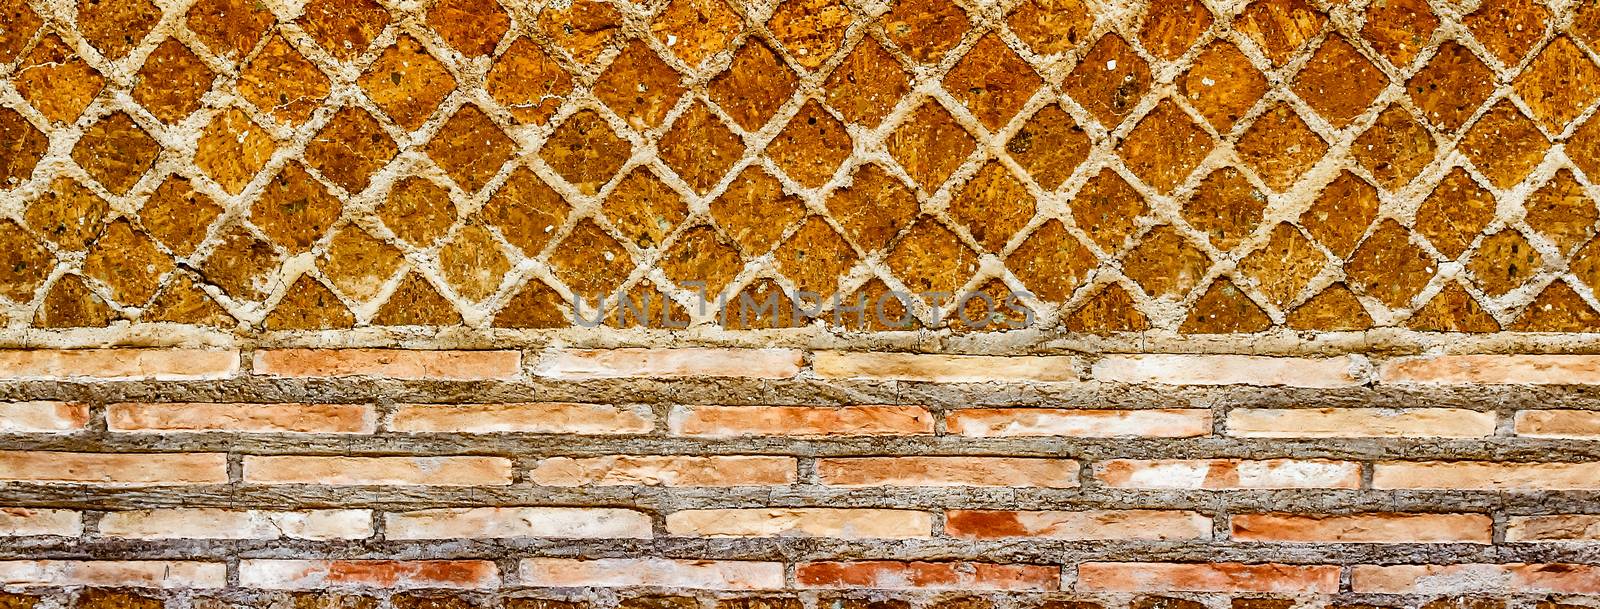 Stone Brick Wall Texture, may use as background by marcorubino